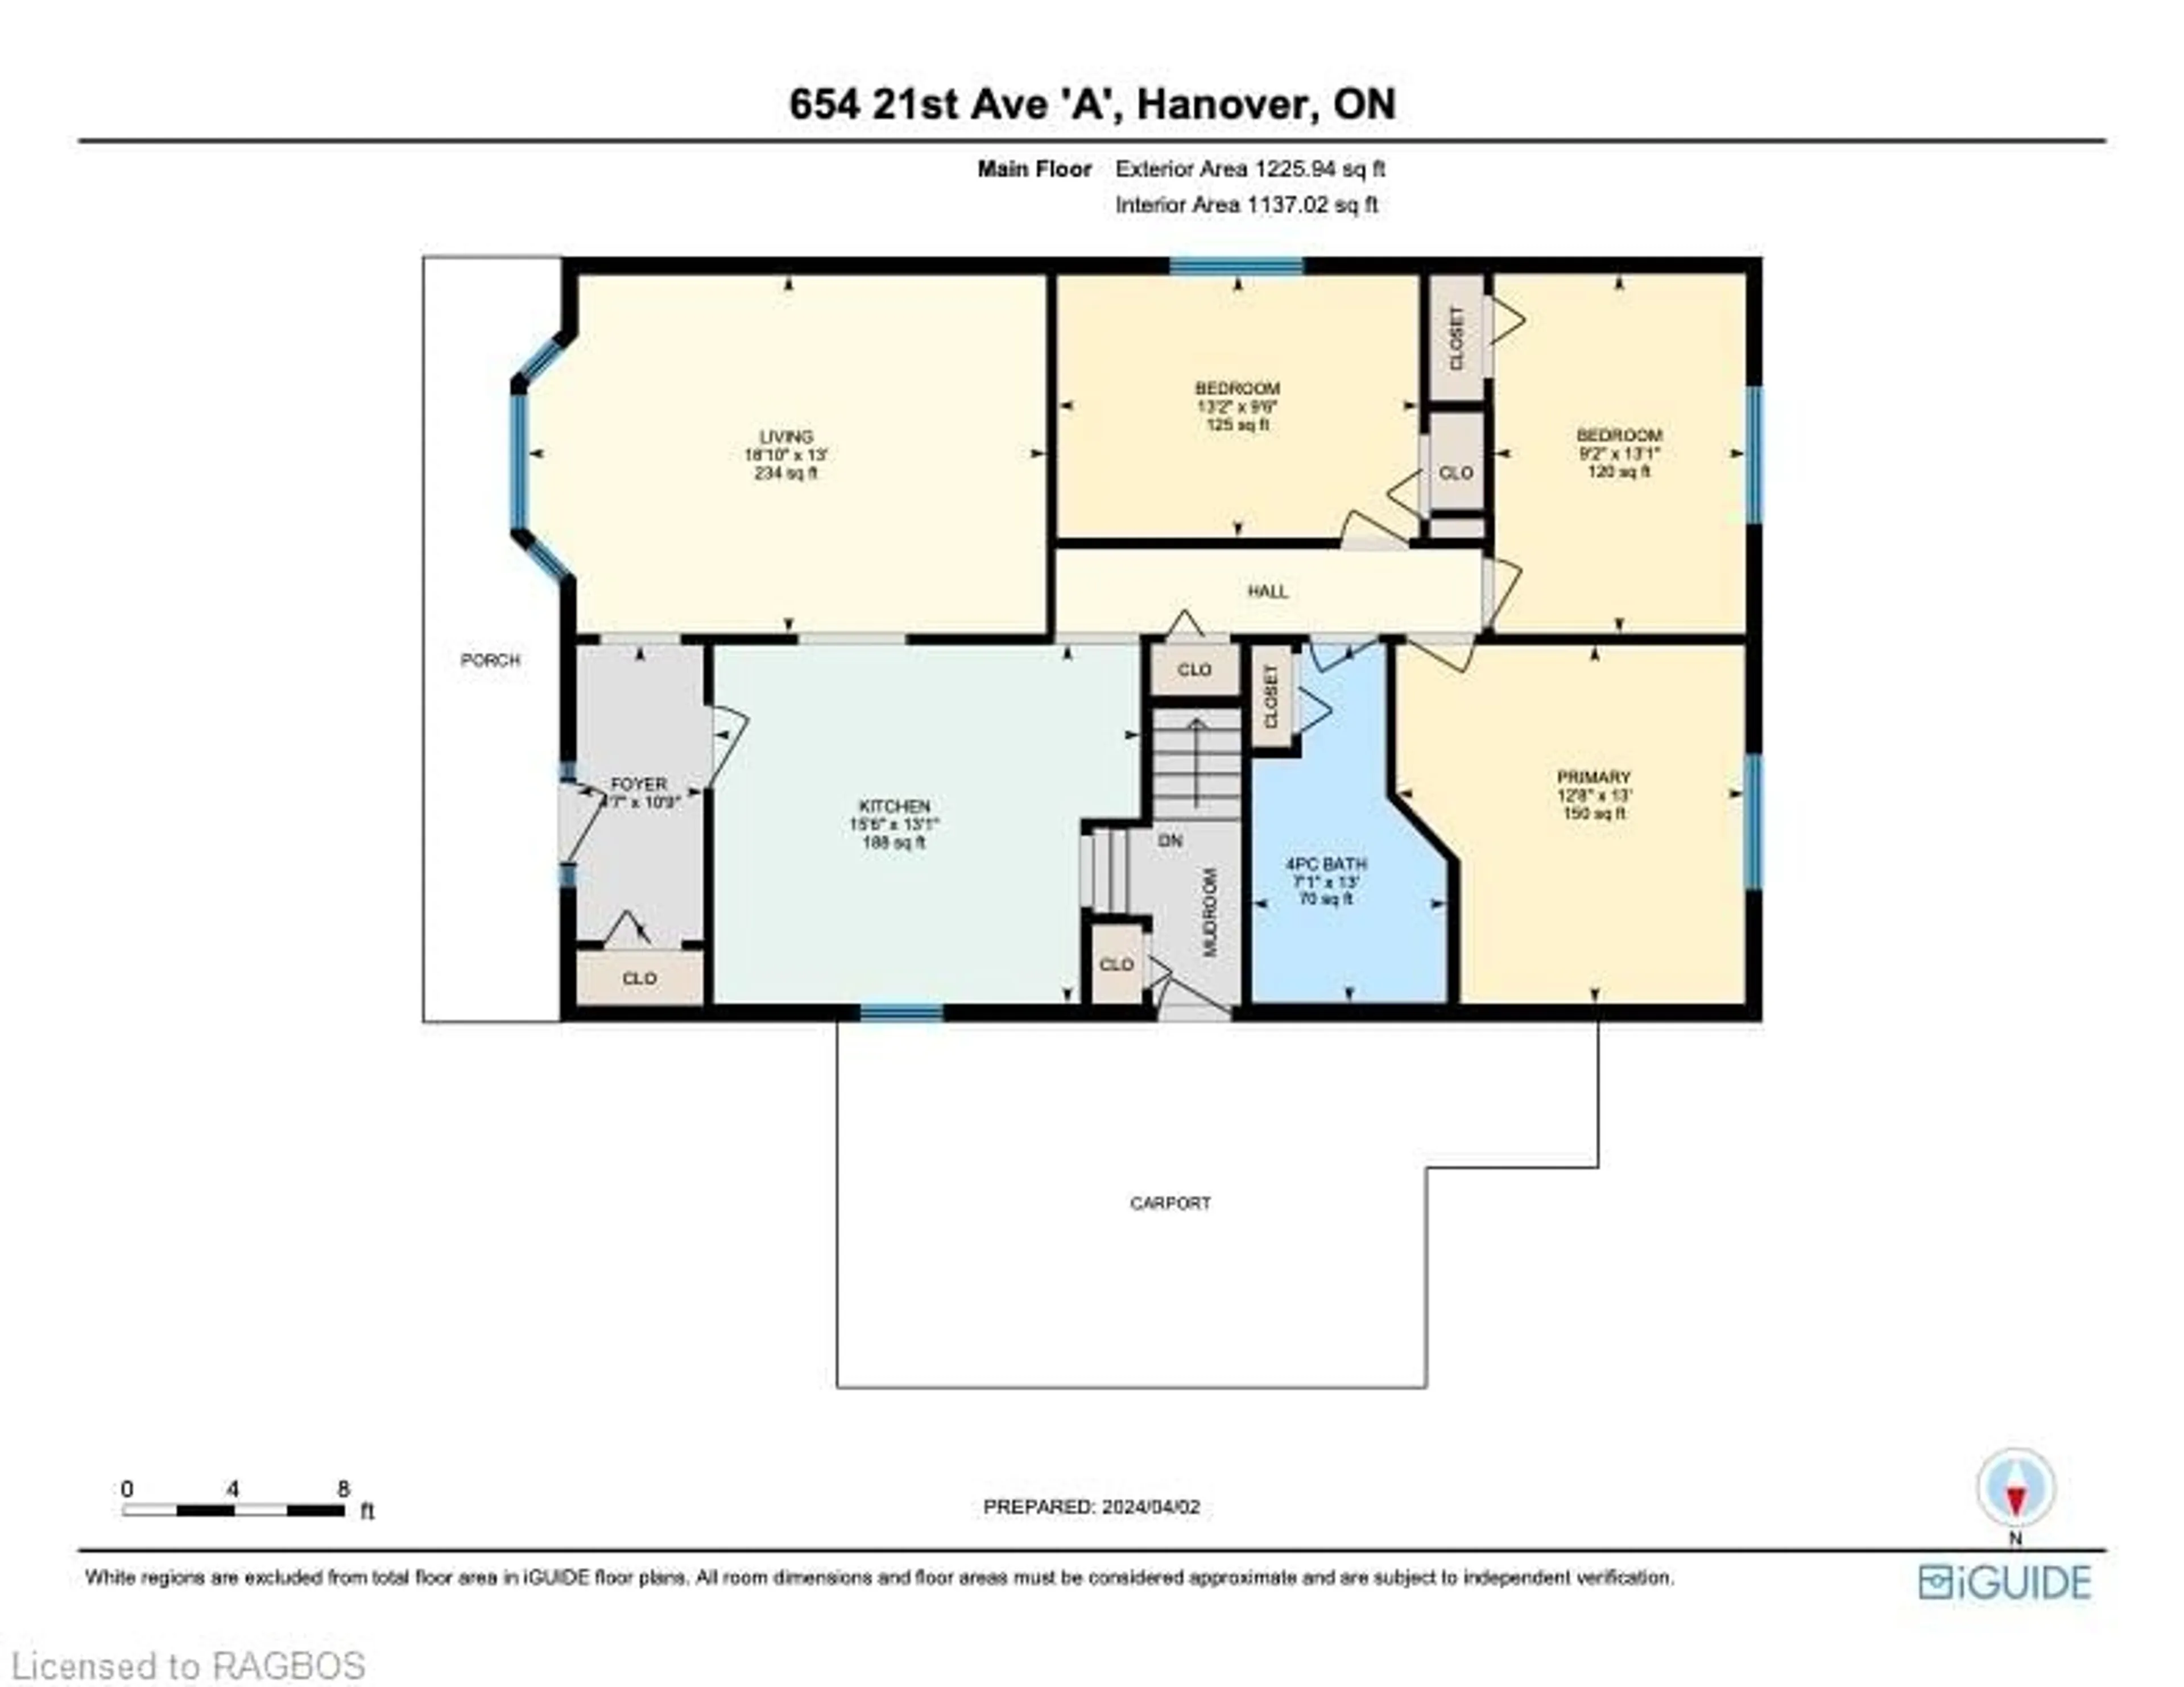 Floor plan for 654 21st Avenue A, Hanover Ontario N4N 3L2